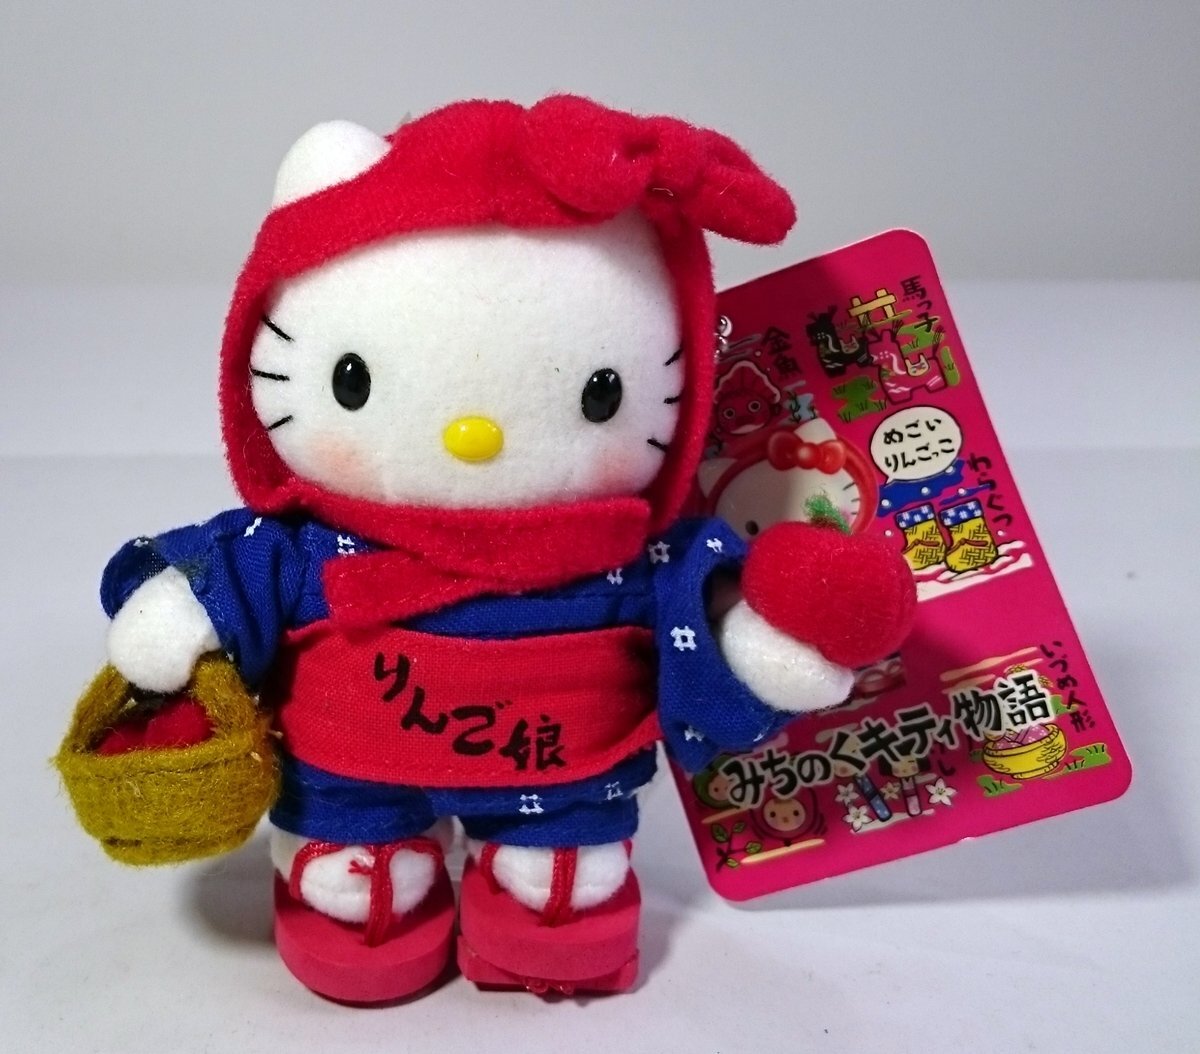 [W3879] rare goods Hello Kitty soft toy mascot ... . Kitty monogatari apple .2001 year Sanrio HELLO KITTY tag attaching used 